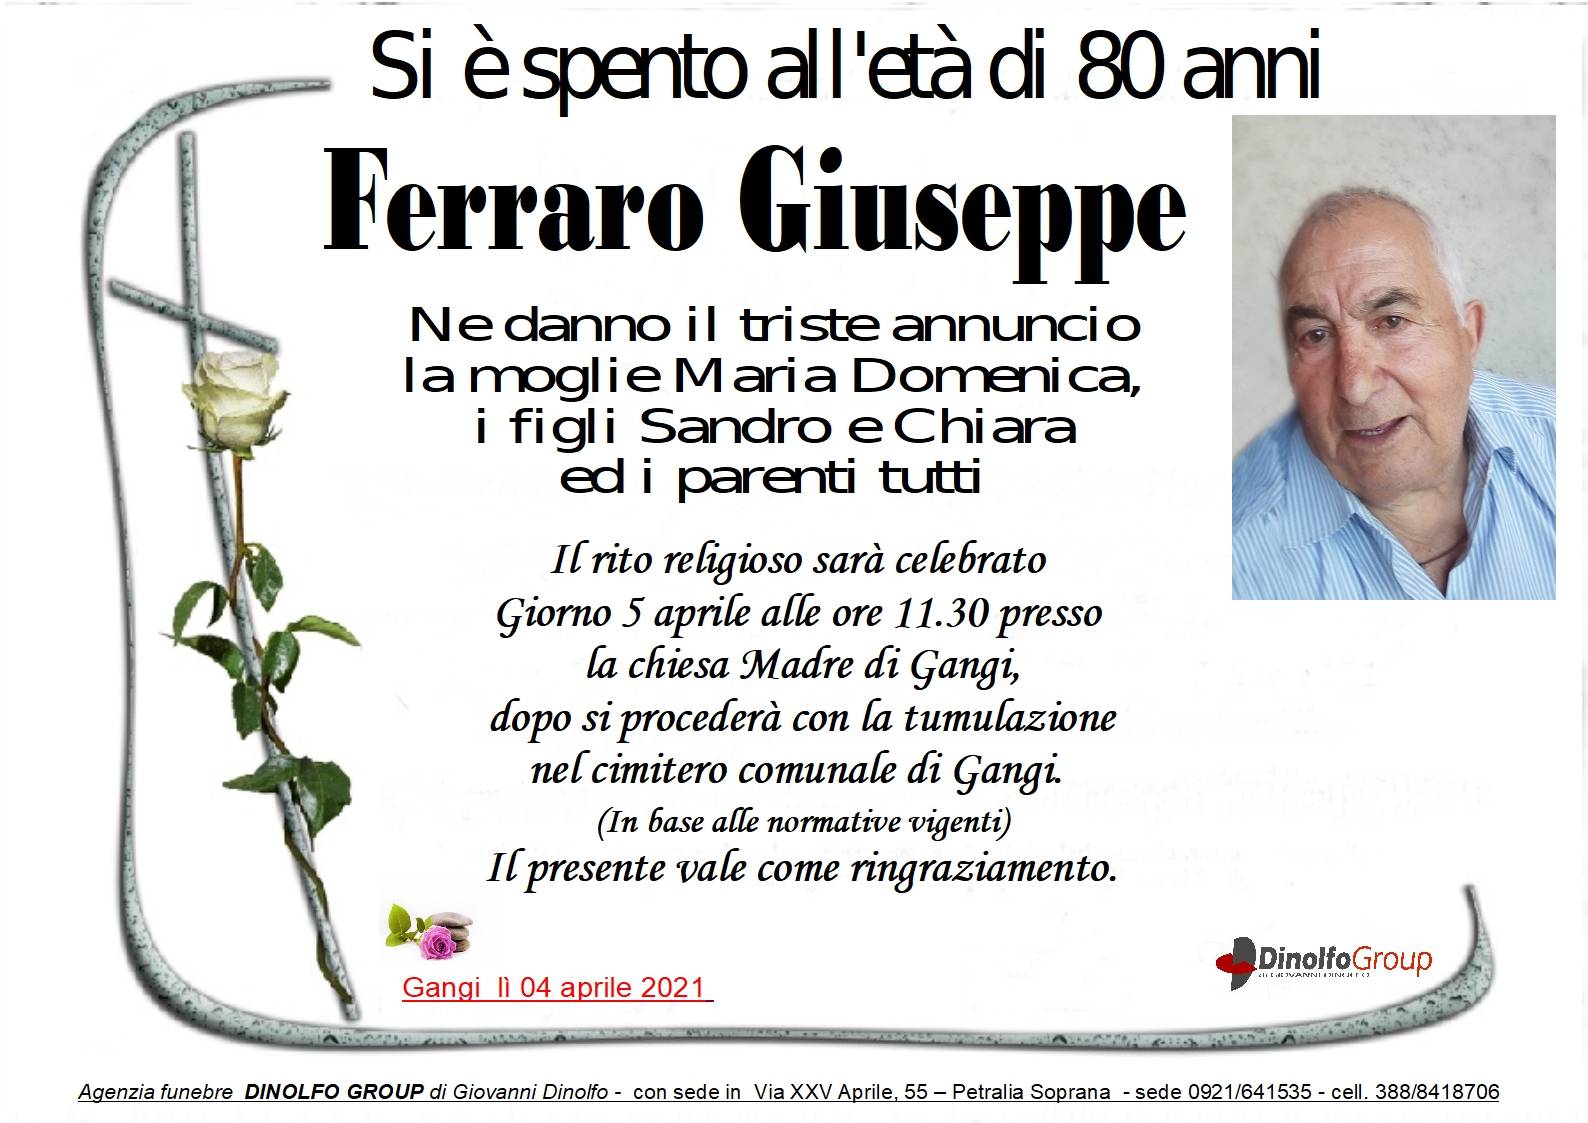 Giuseppe Ferraro